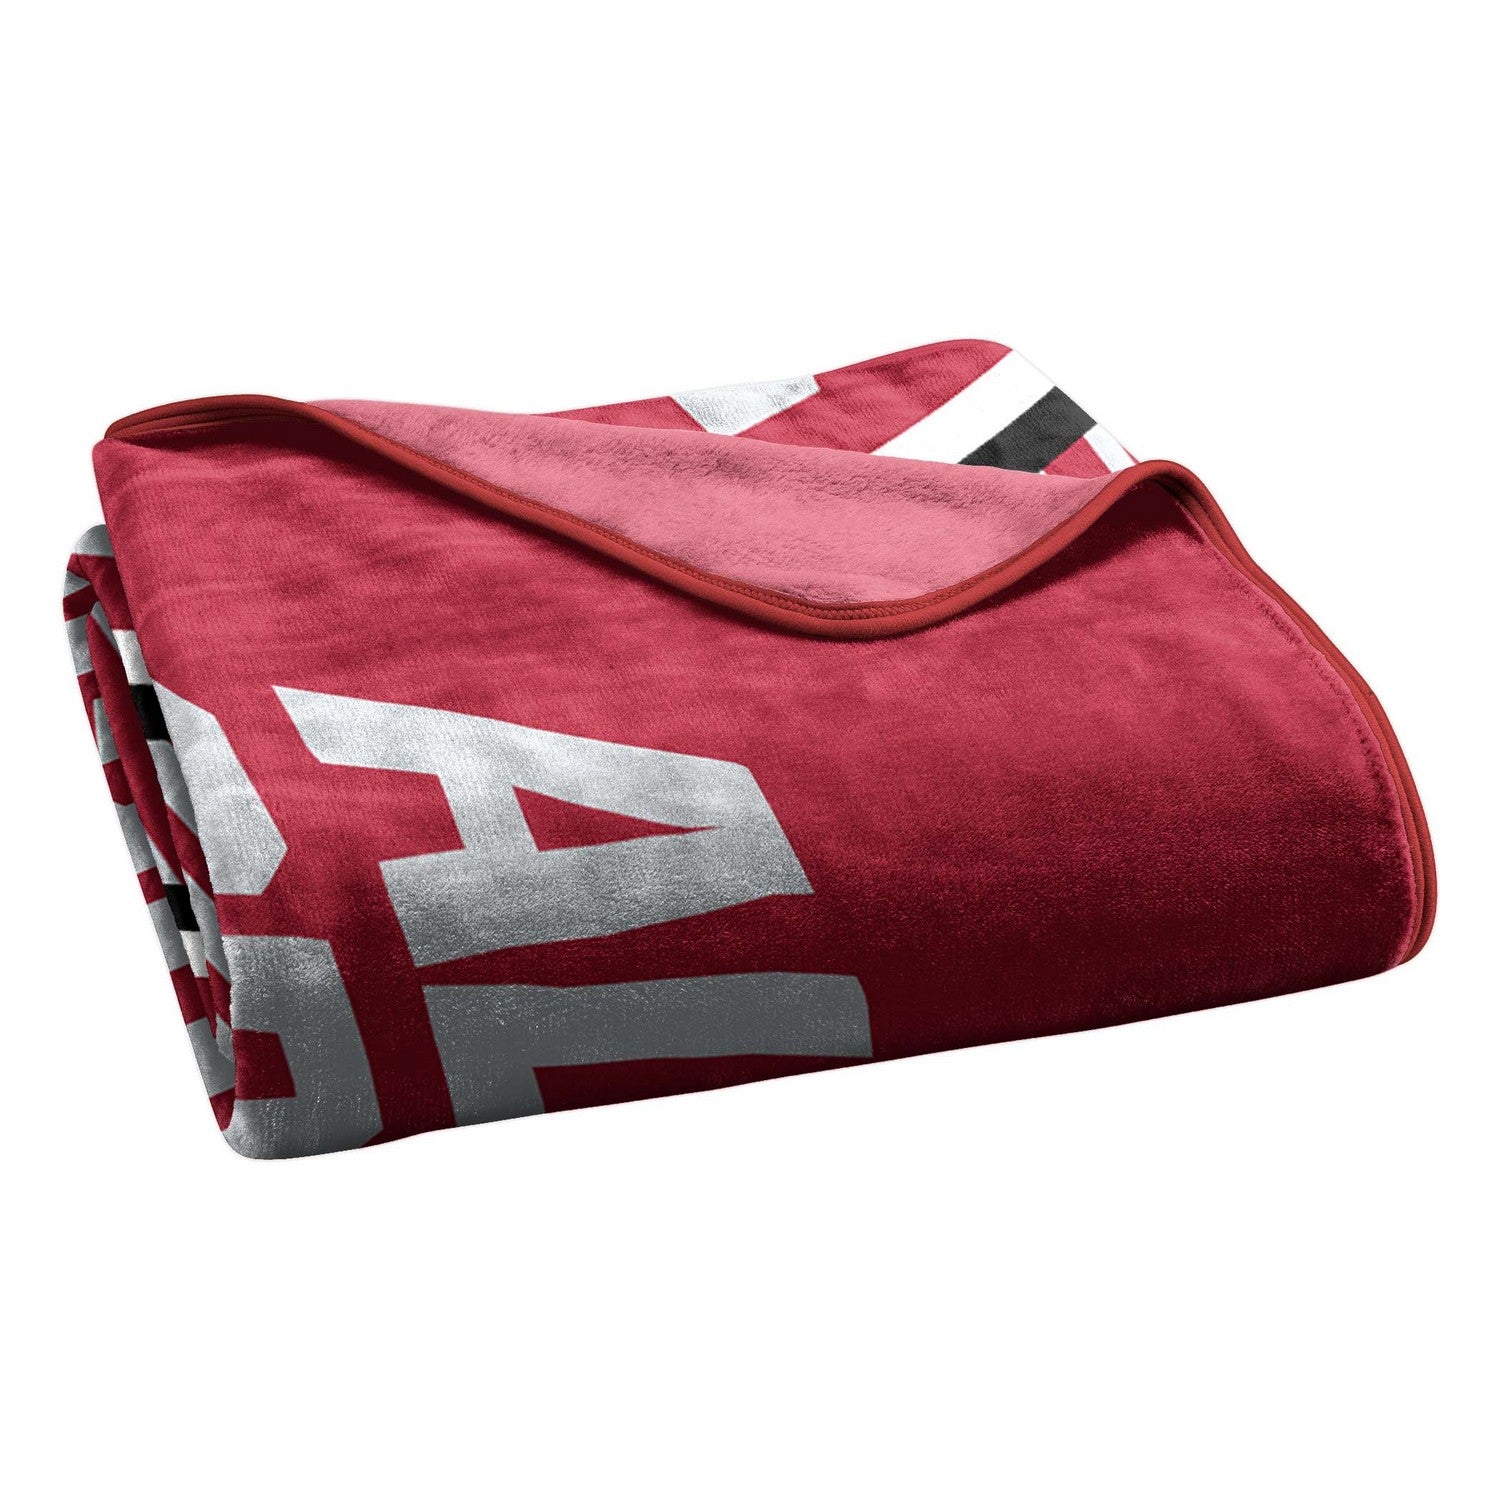 Alabama Crimson Tide NCAA Officially Licensed Raschel Throw Blanket 60x80